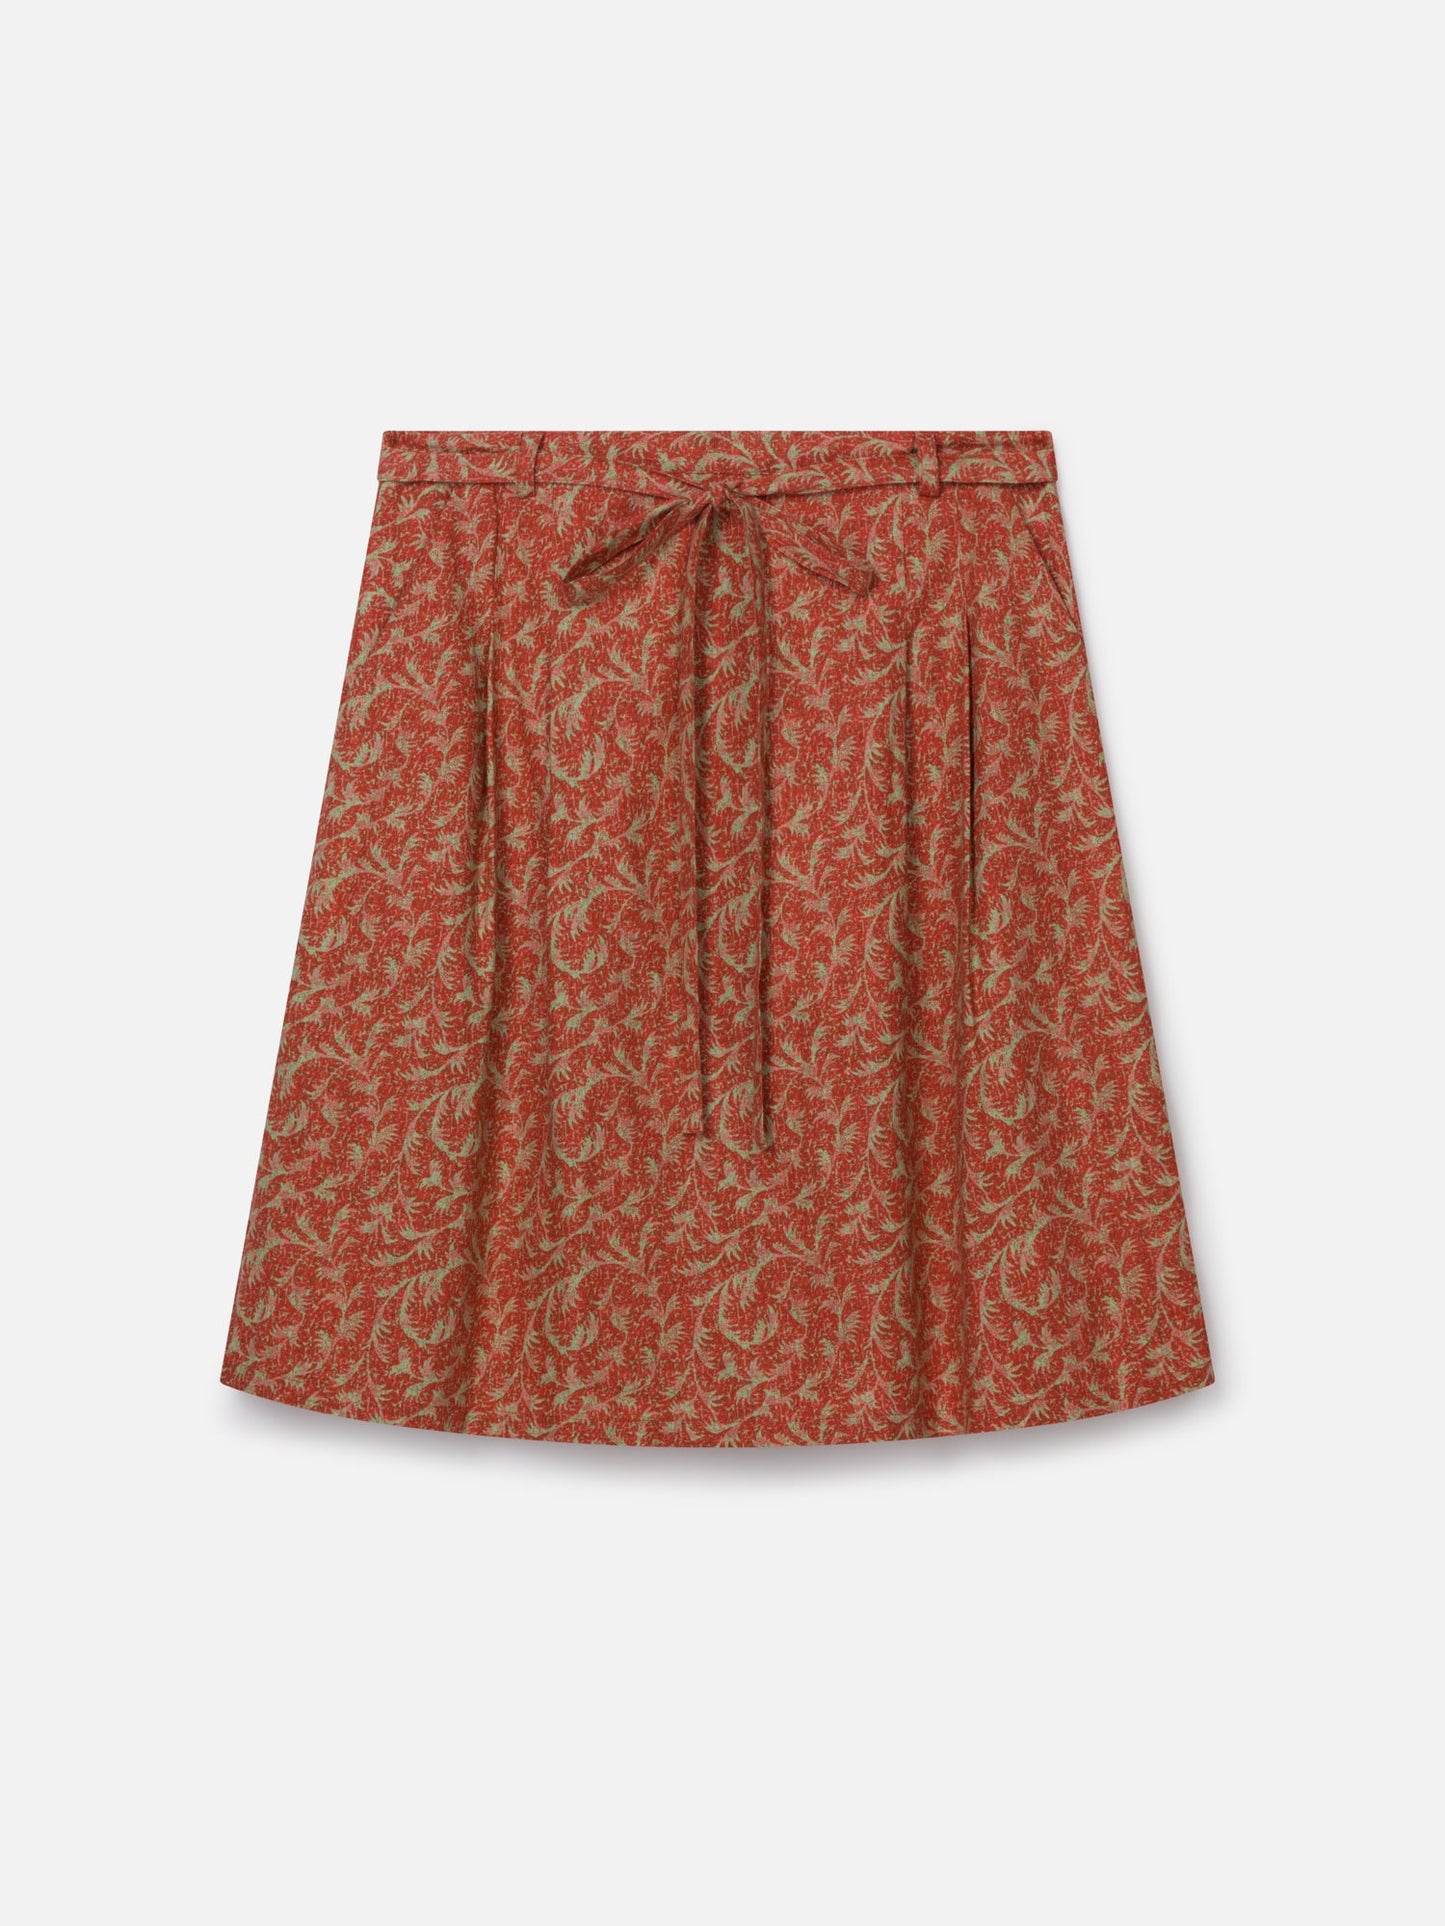 Thought - Zenobia Hemp Short Skirt - WSB7008